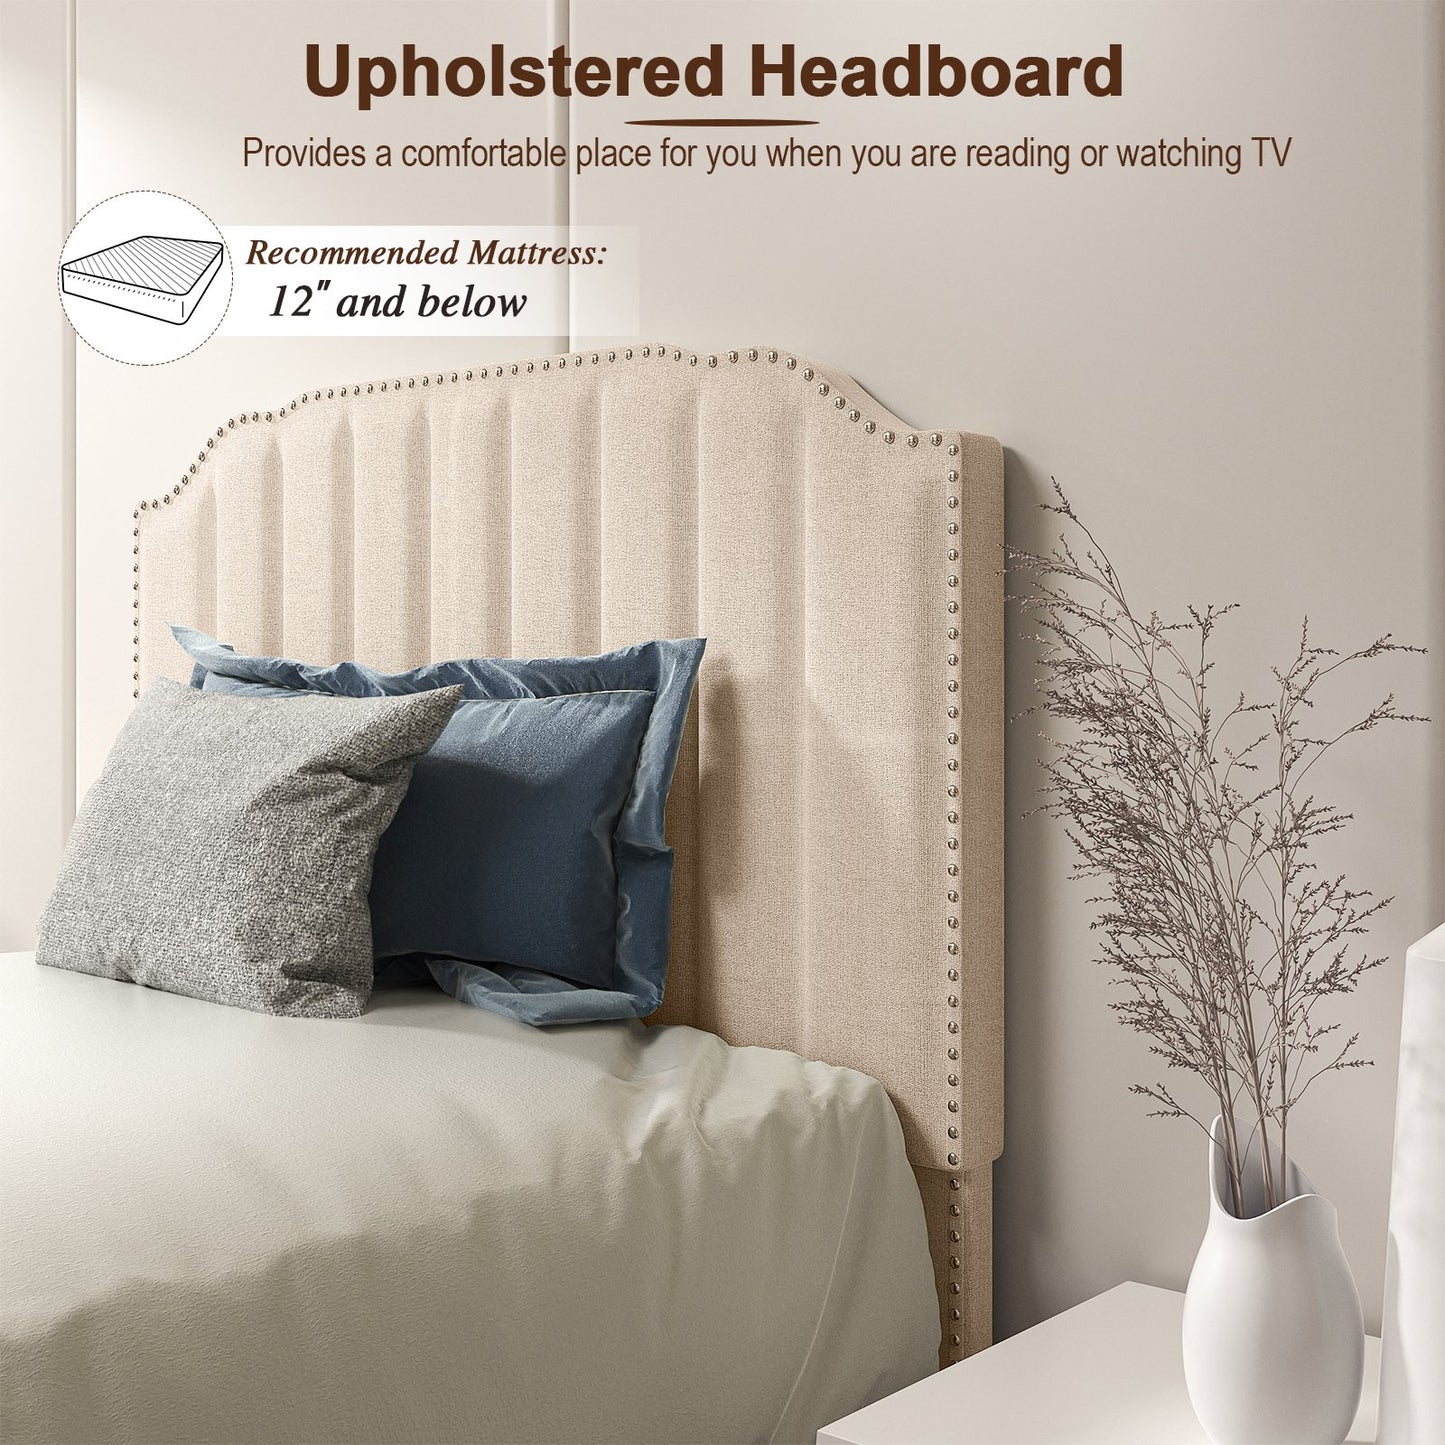 Heavy Duty Upholstered Bed Frame with Rivet Headboard-Twin Size, Beige